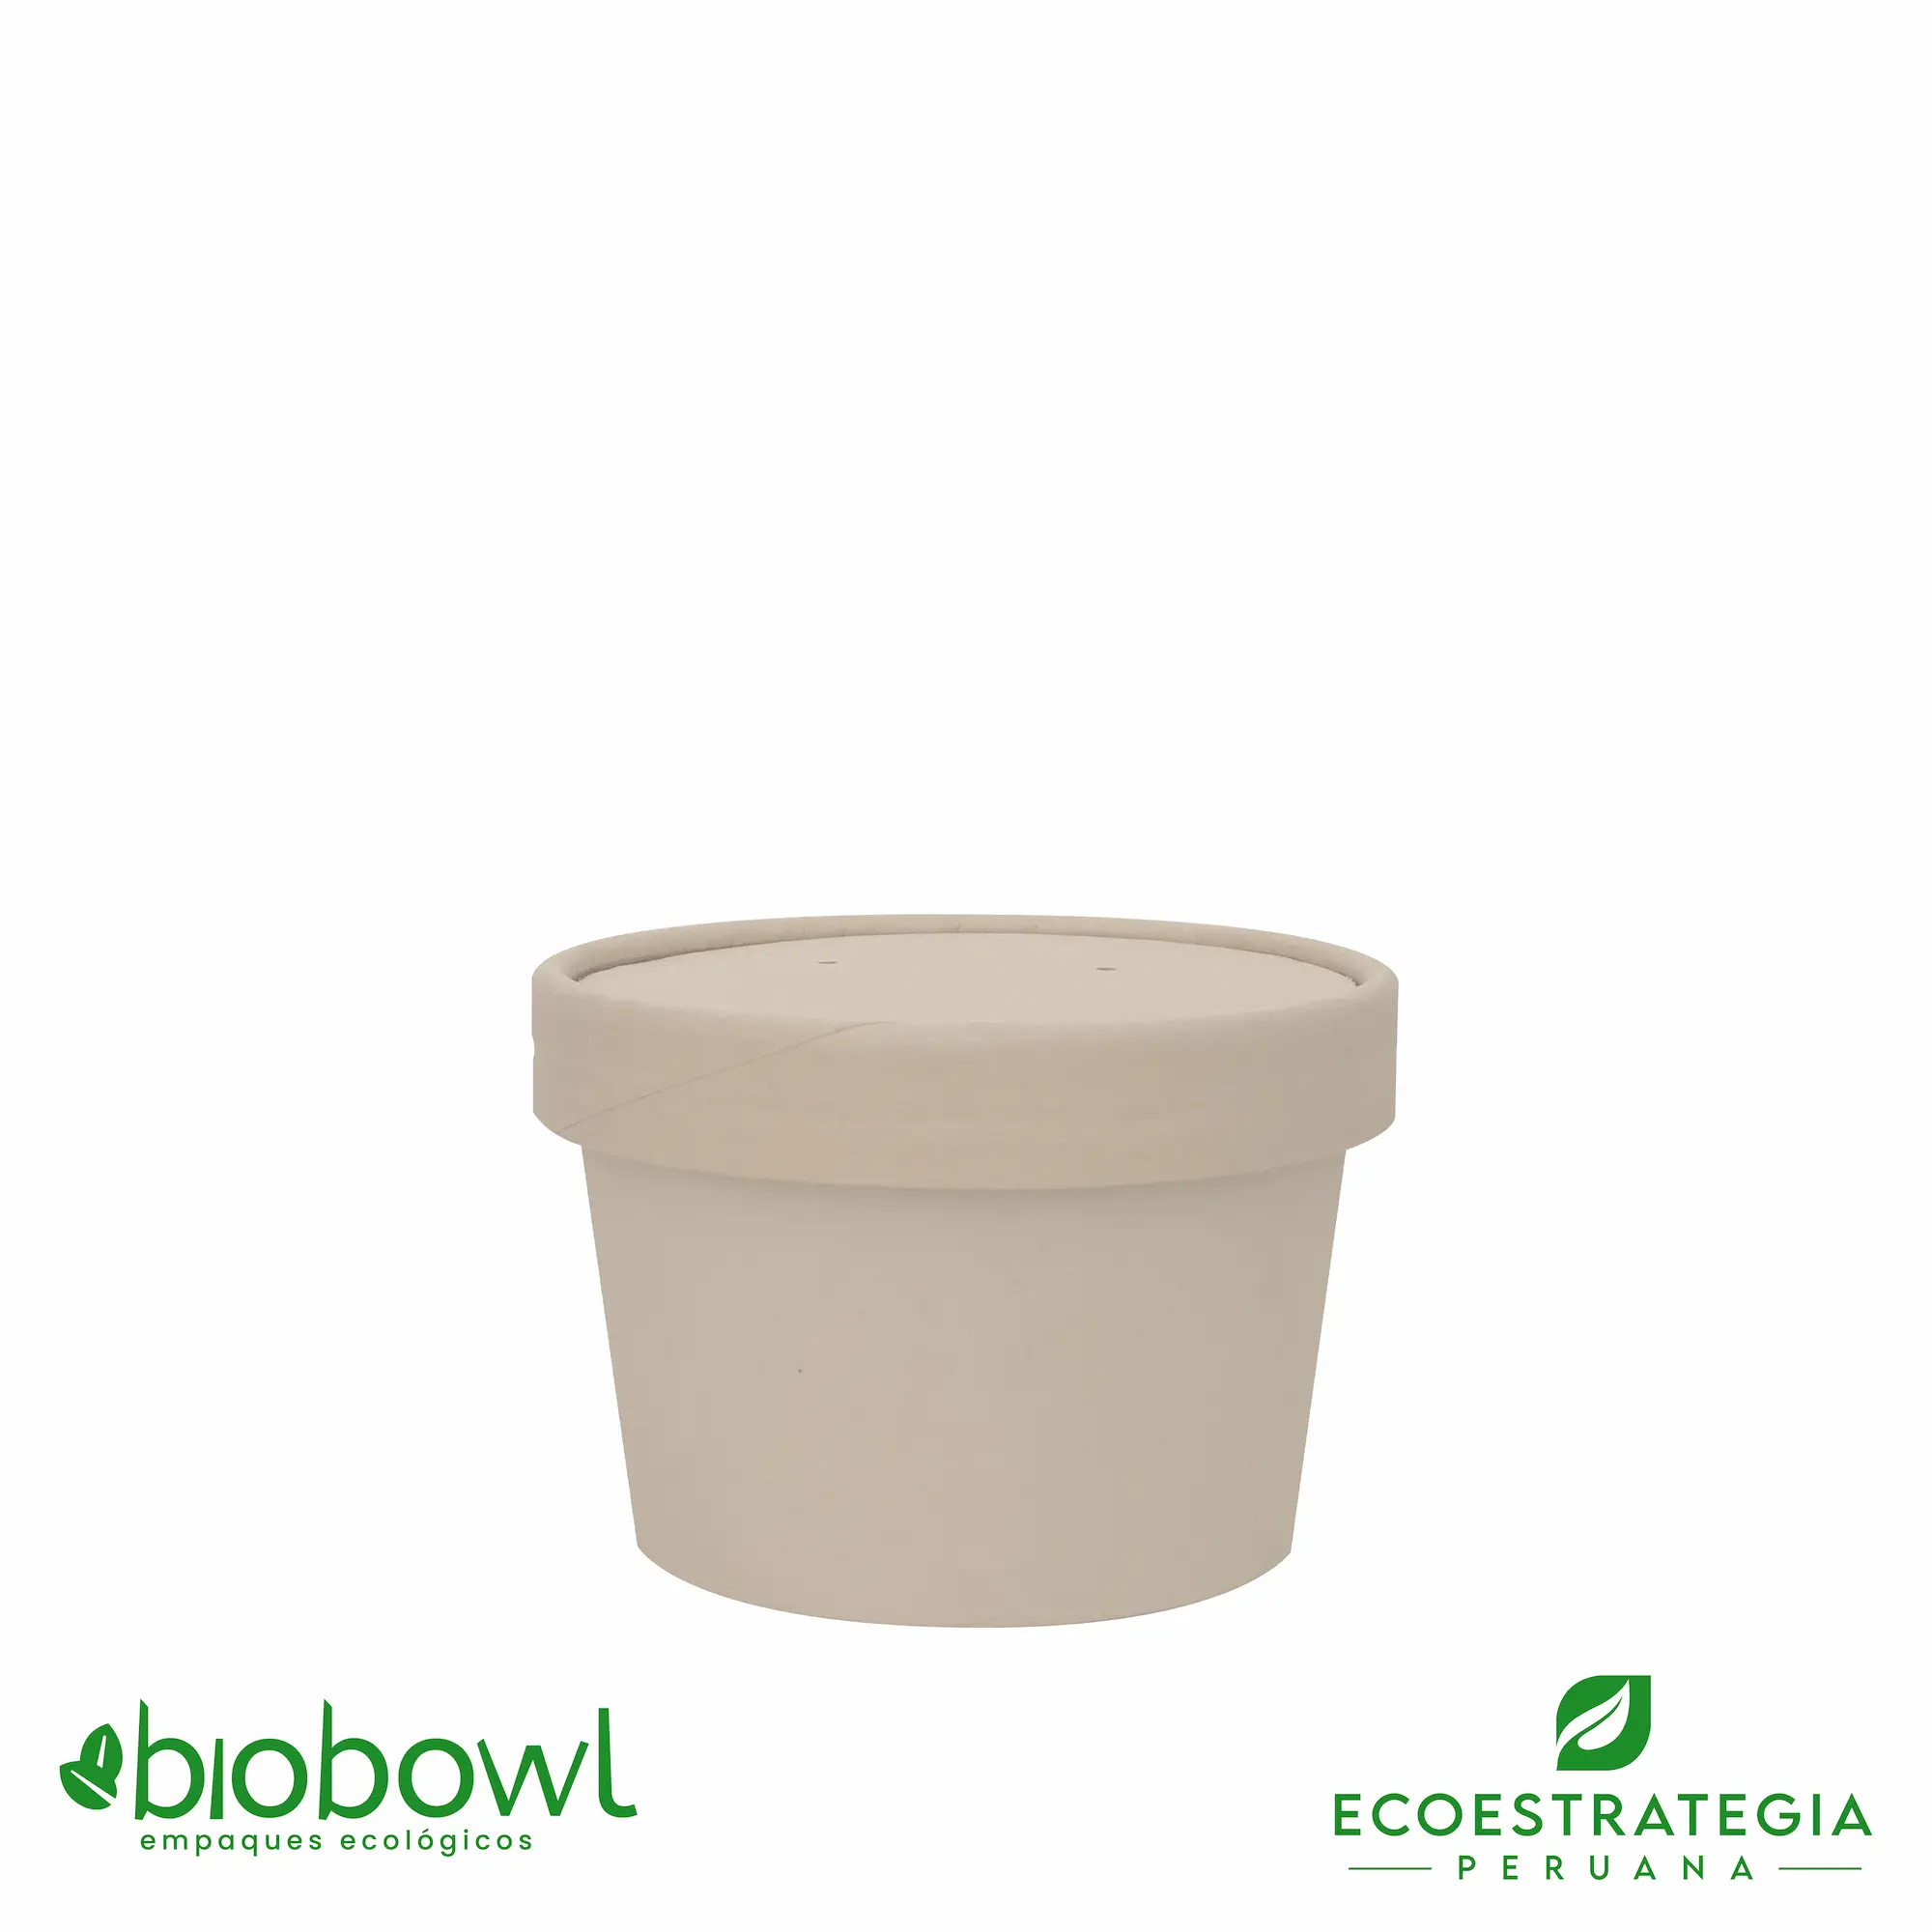 El bowl bambú biodegradable de 8oz, EP-S8 es conocido como bowl bamboo 8oz, bambú sopero 8oz, bambú salad 8oz, bowl para ensalada con tapa pet 8oz o sopero con fibra de bambú 8oz, bowl bambú ecologico, bowl bambú reciclable, bowl descartable